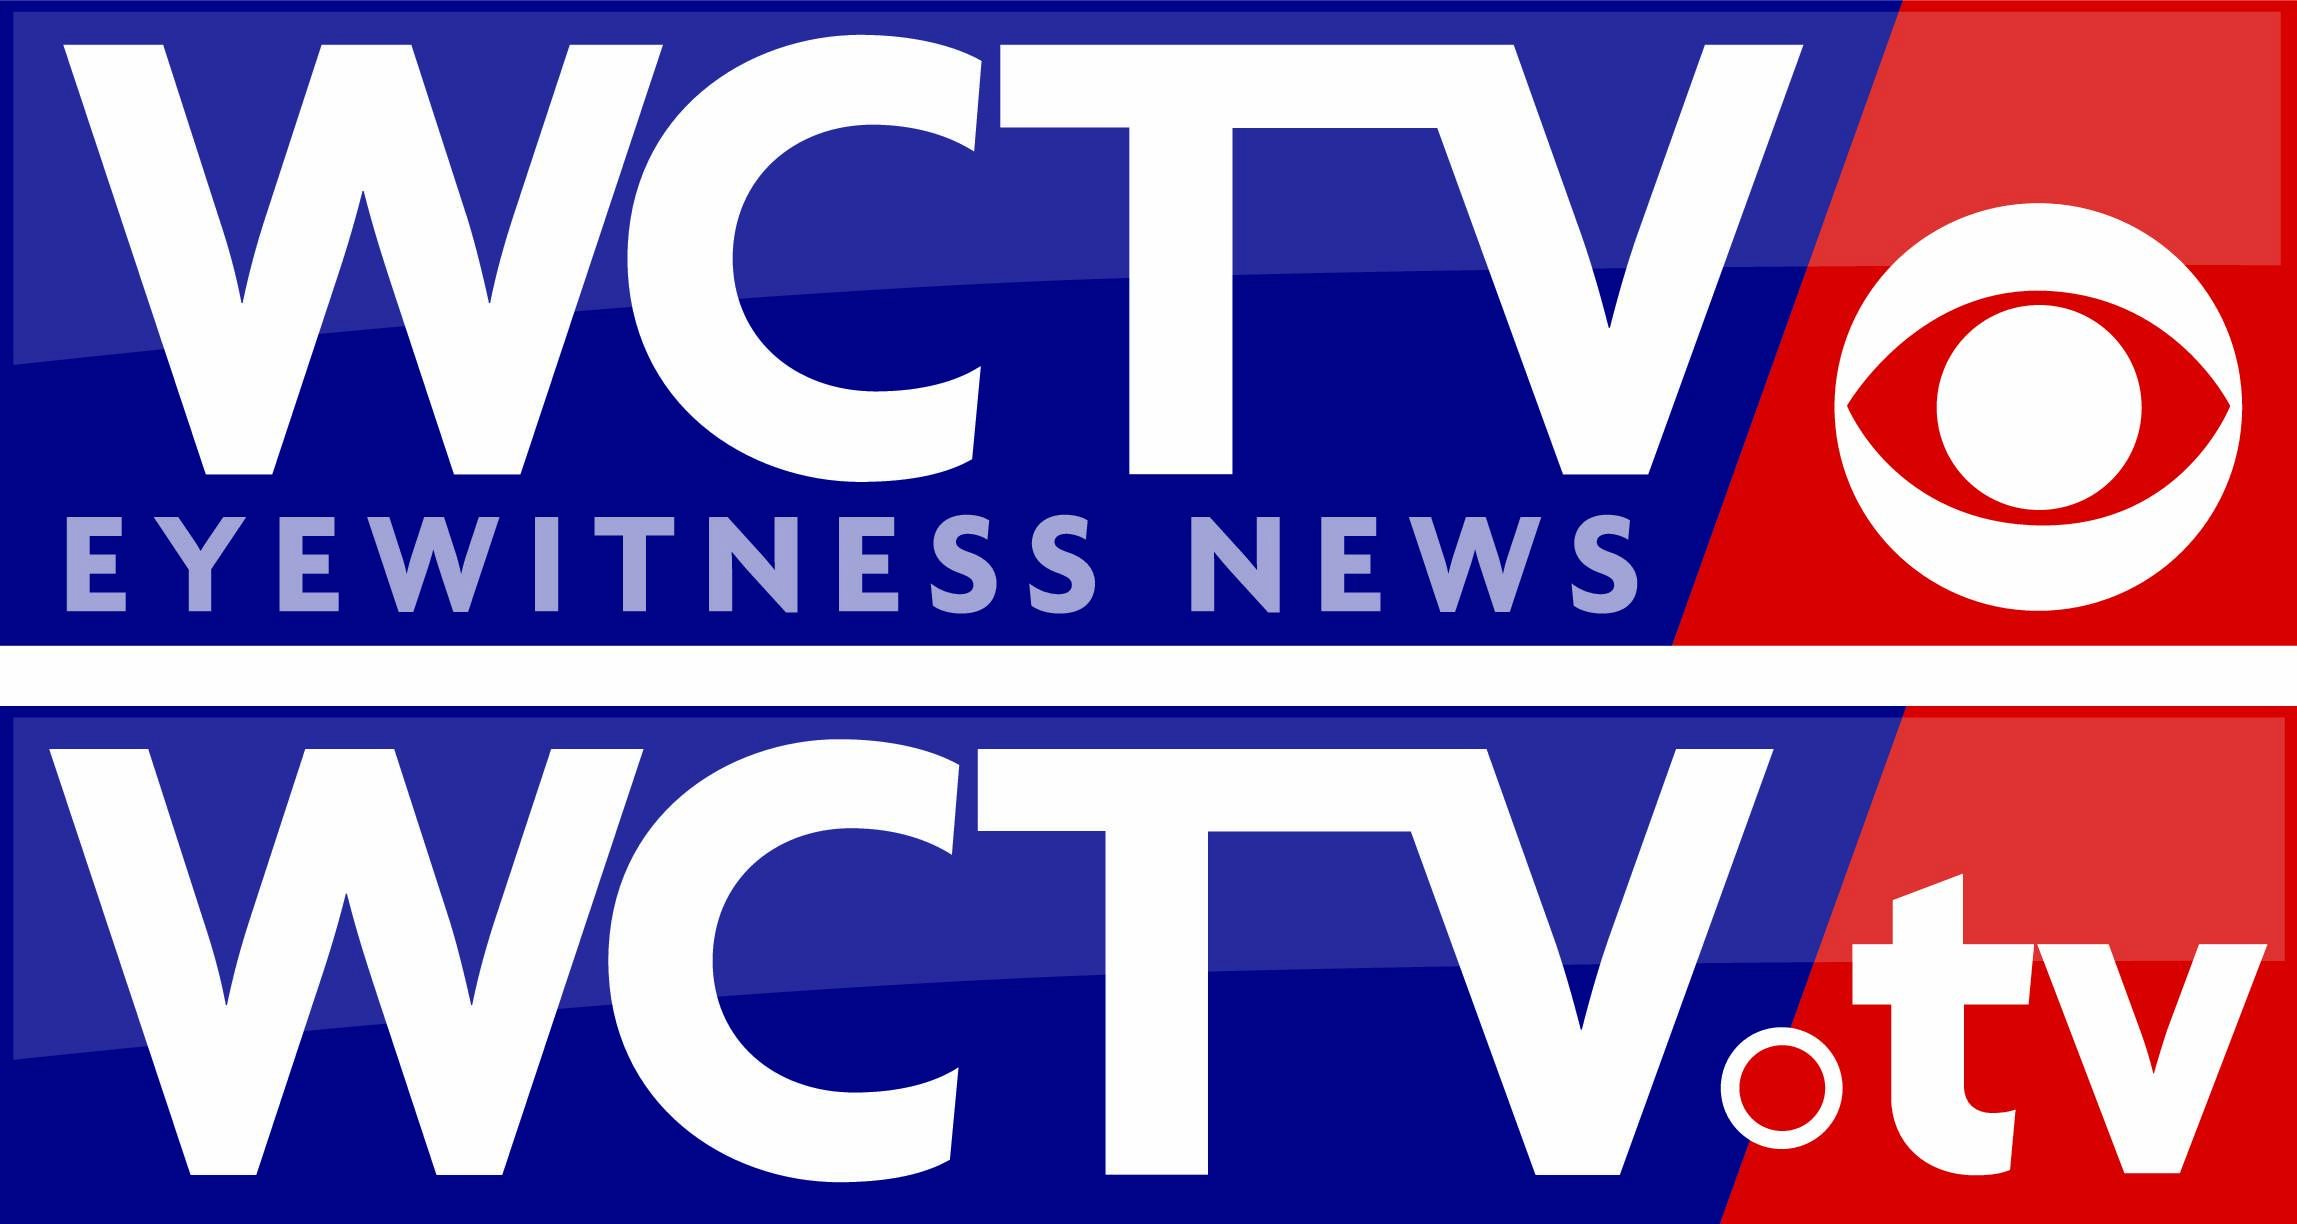 WCTV EYEWITNESS NEWS